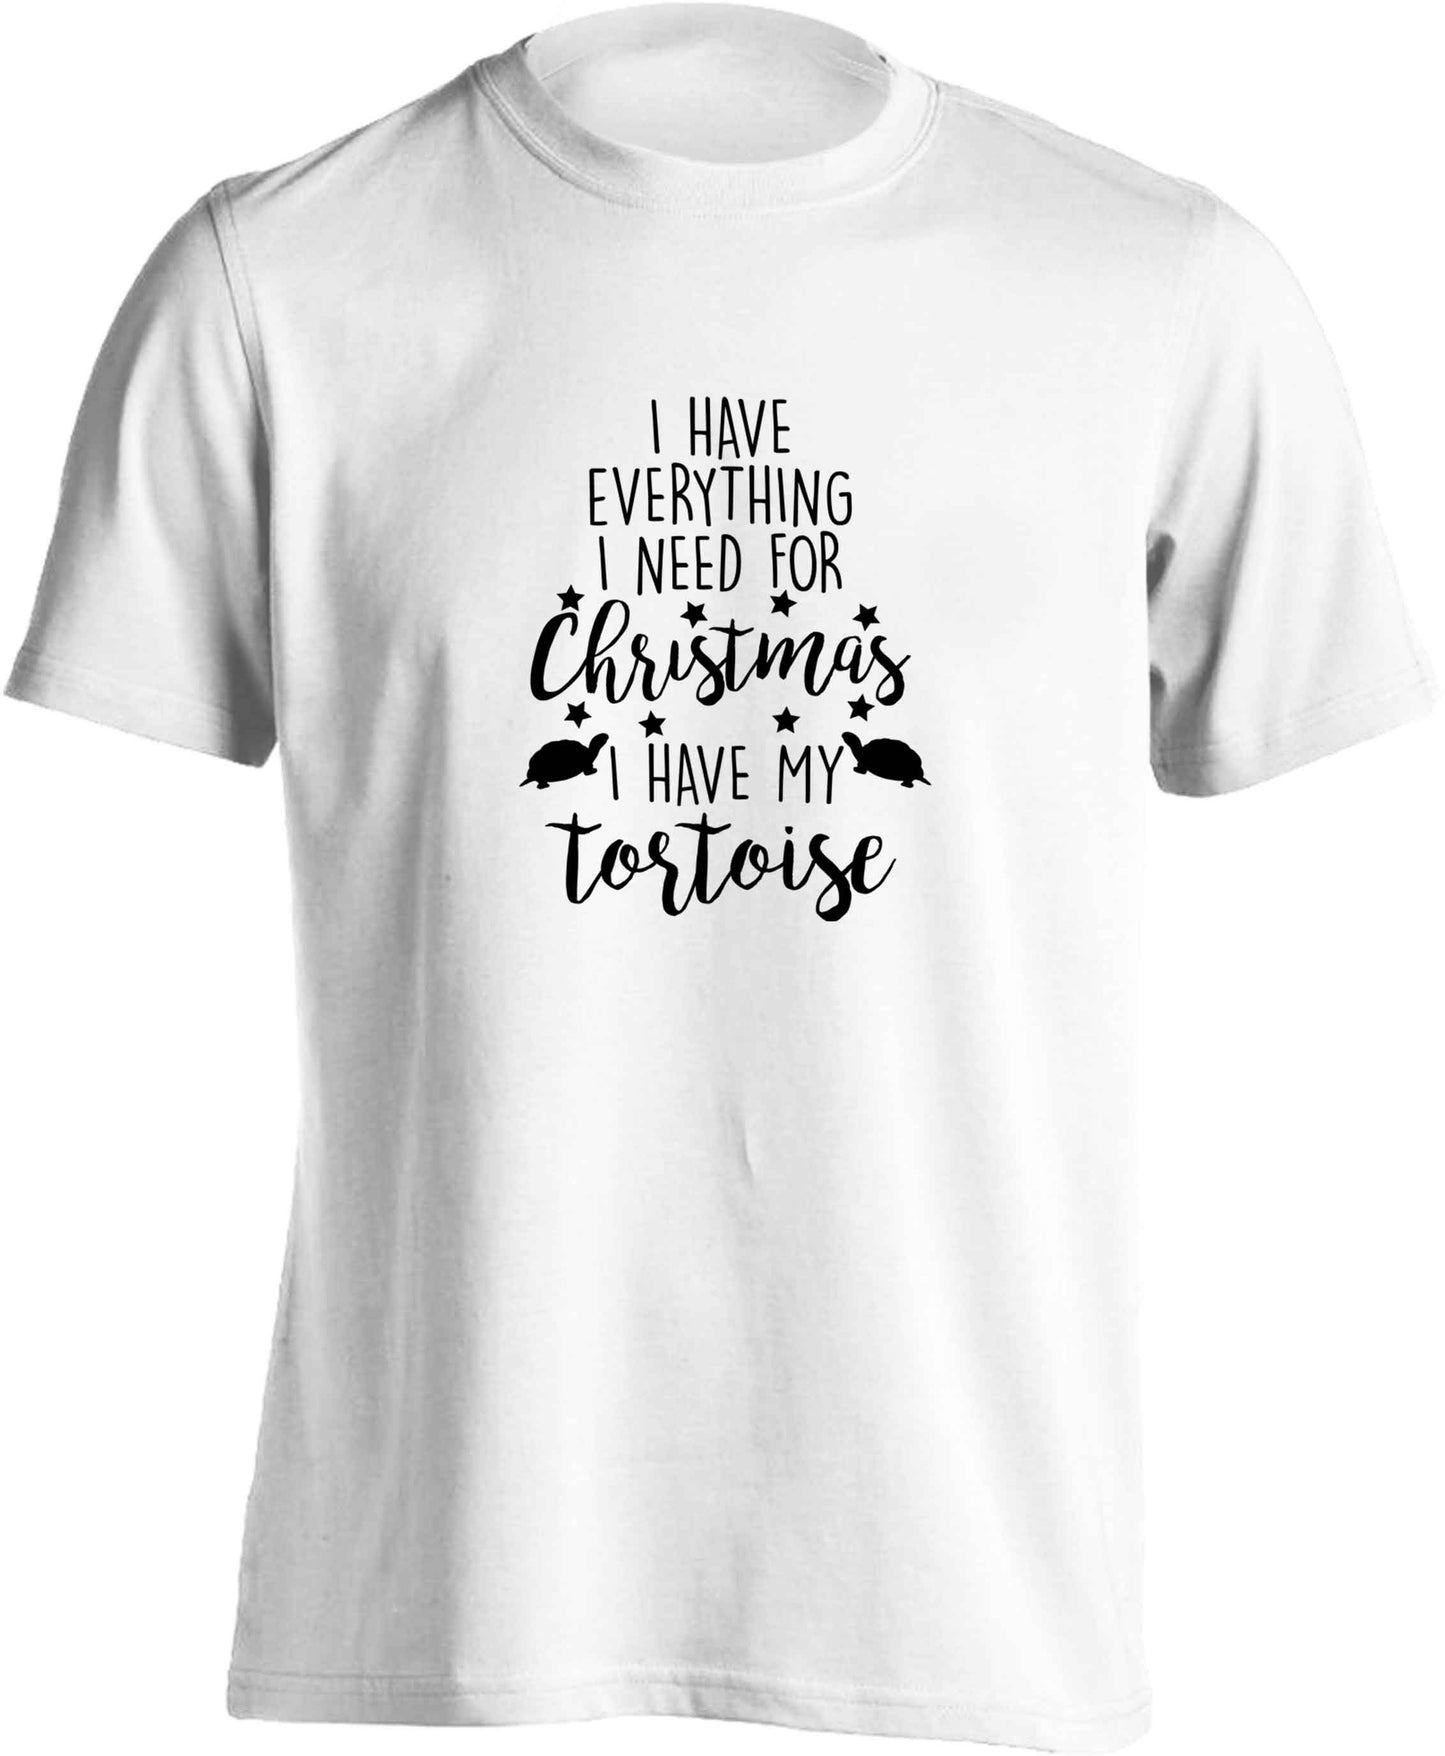 I have everything I need for Christmas I have my tortoise adults unisex white Tshirt 2XL